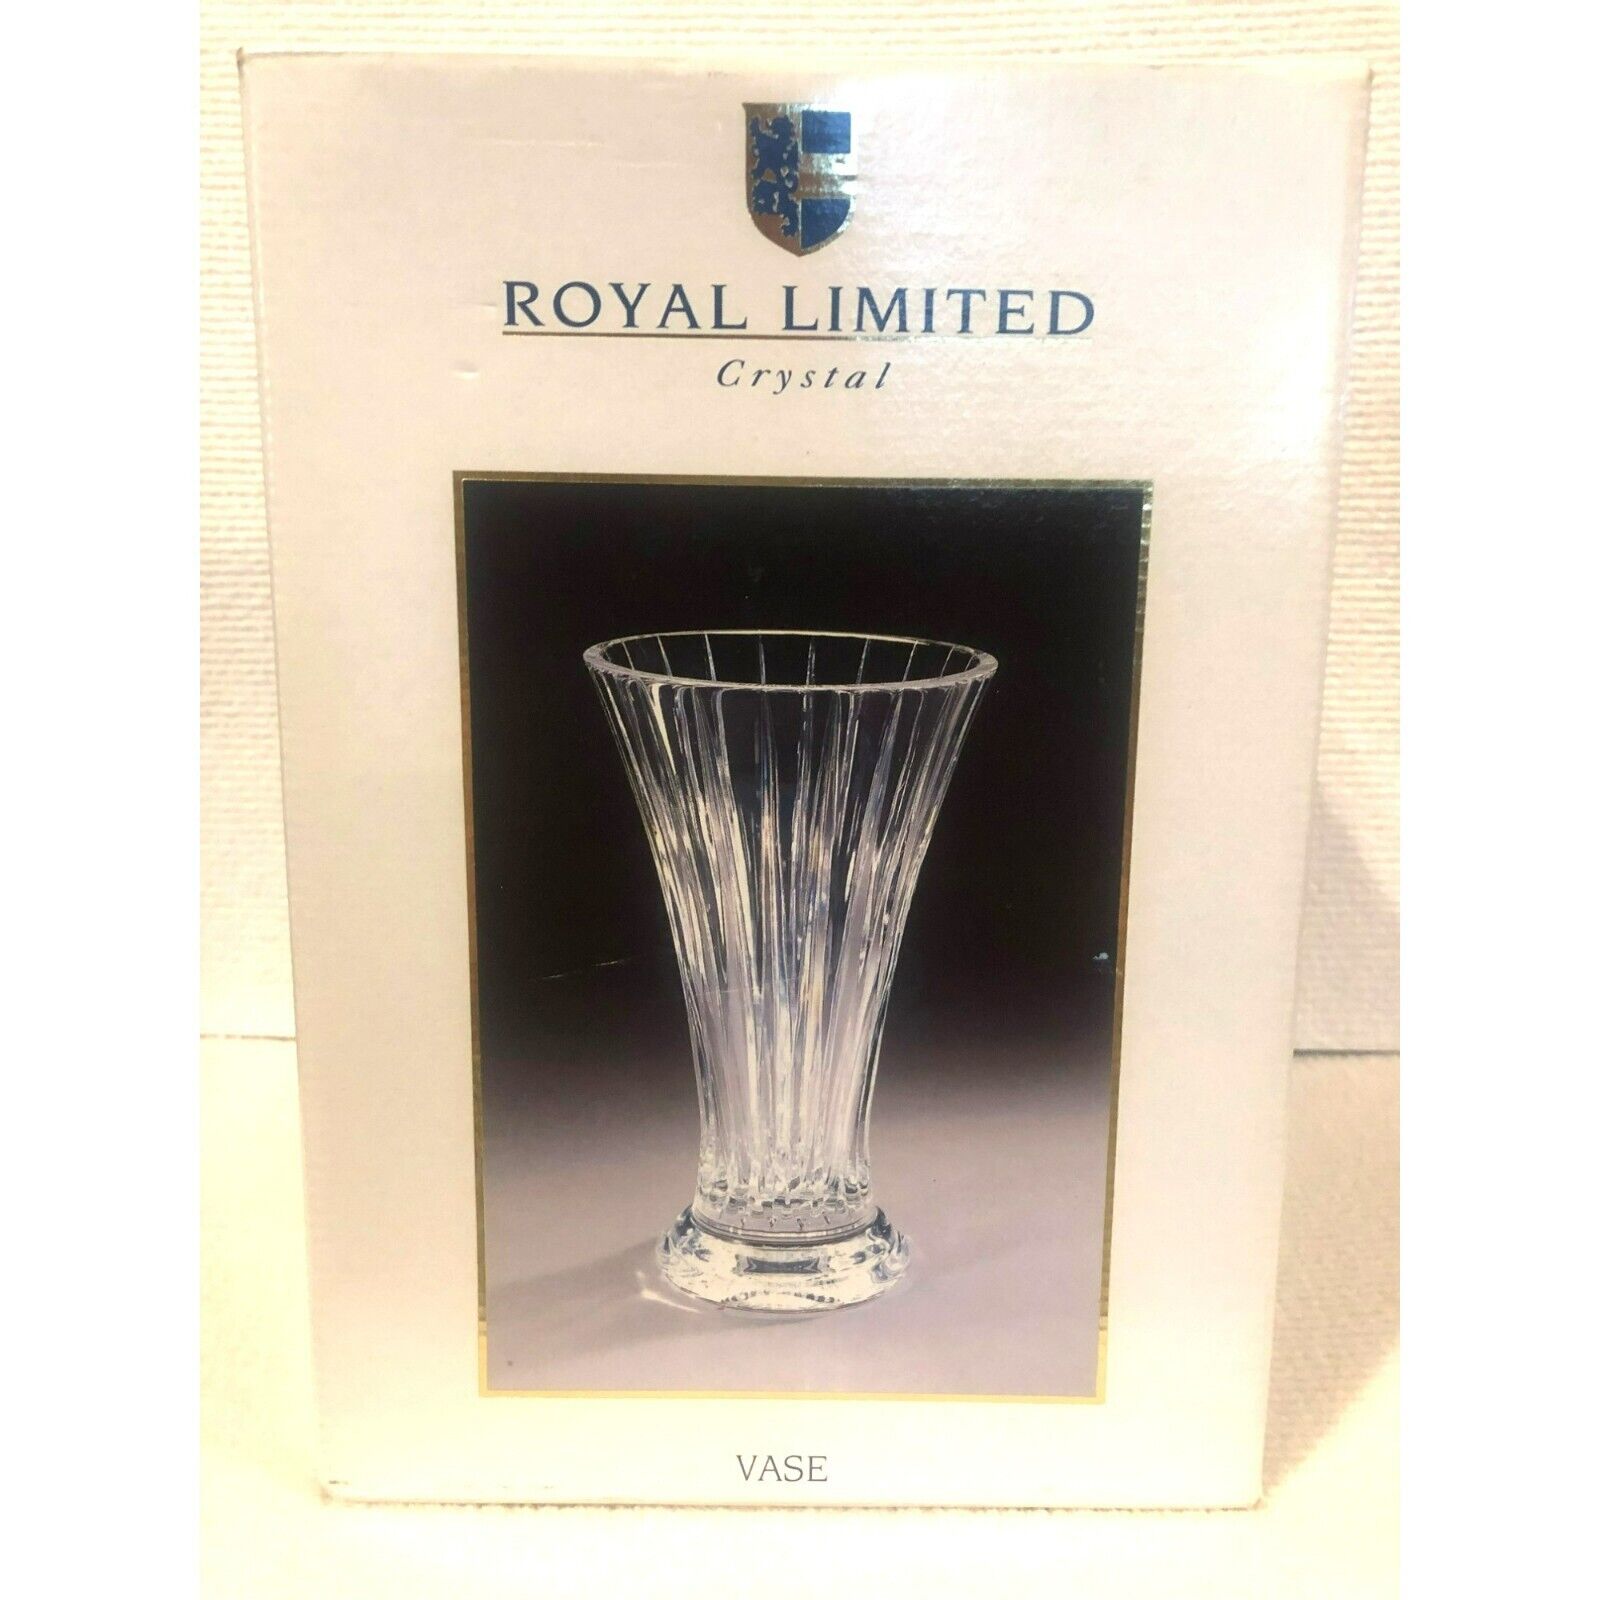 Royal Limited Crystal Vase 1995 May Dept Stores Co NIB Hollywood Regency